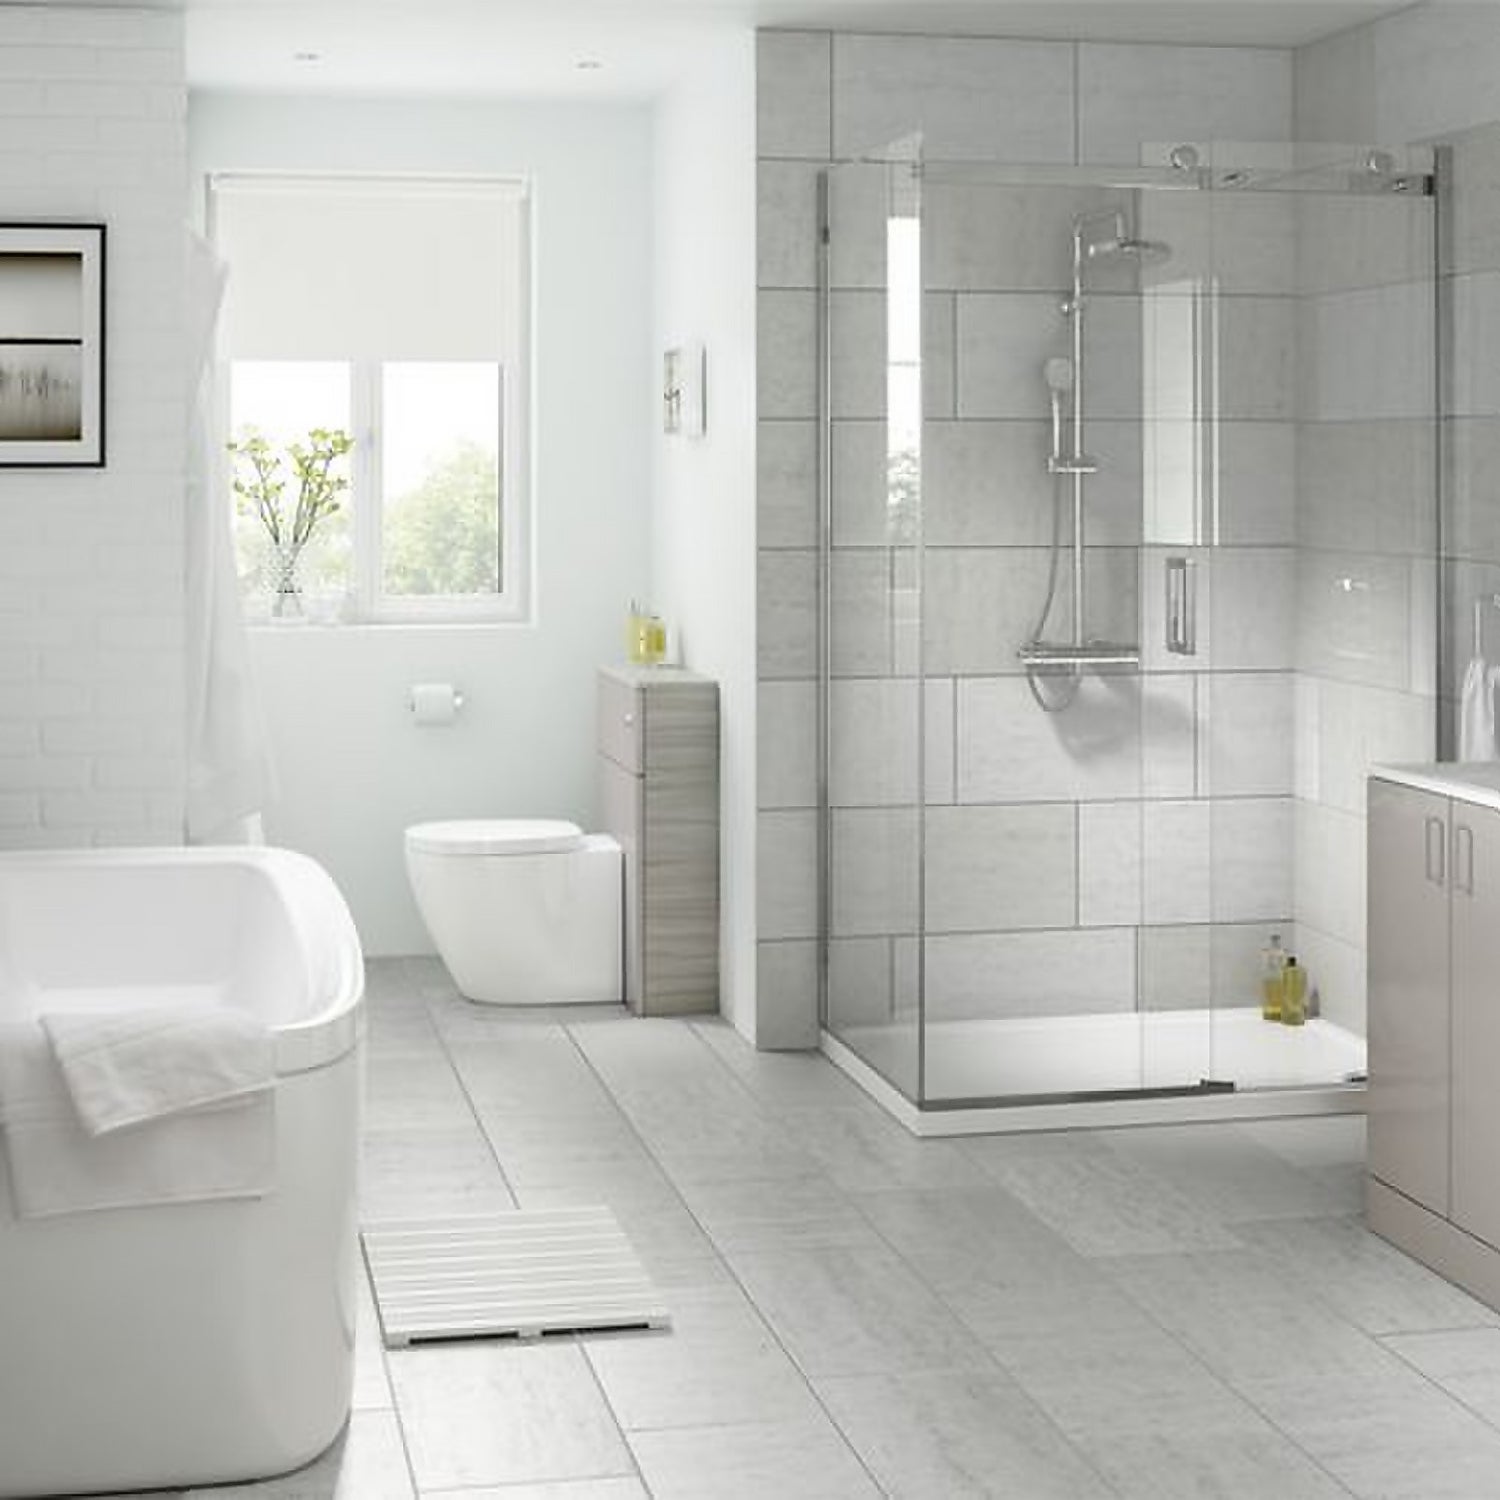 Classico Light Grey Porcelain Wall, Light Gray Tile Bathroom Floor